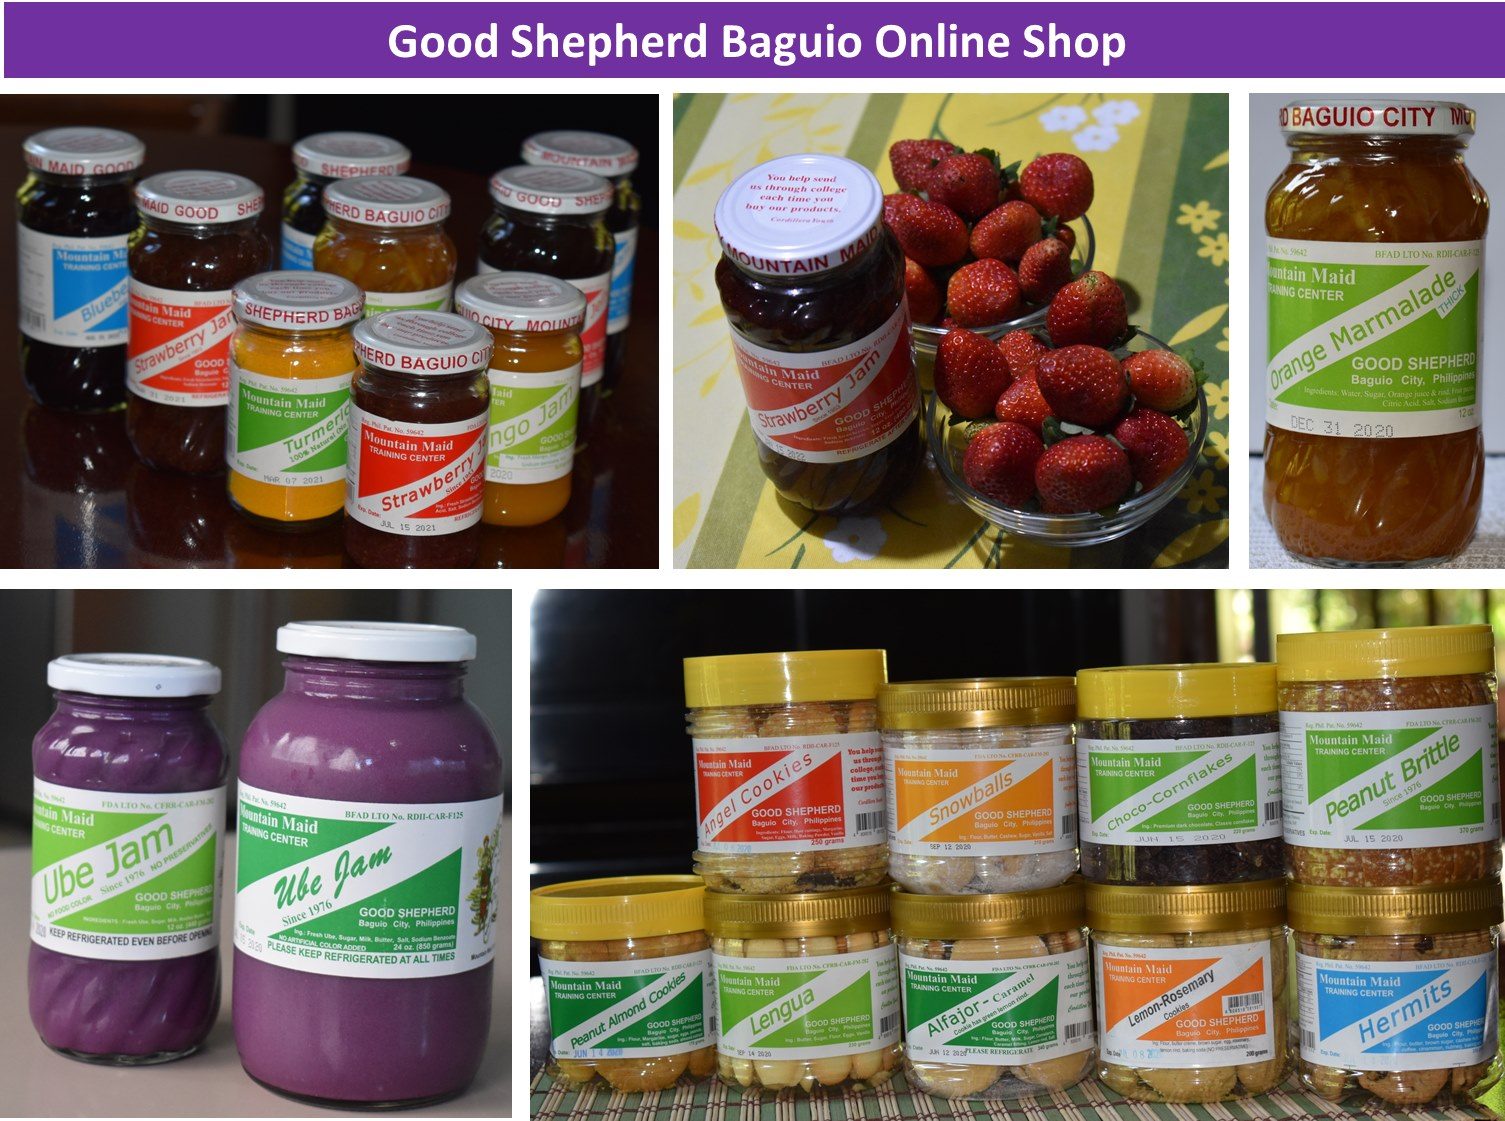 Good Shepherd Baguio launches online shop